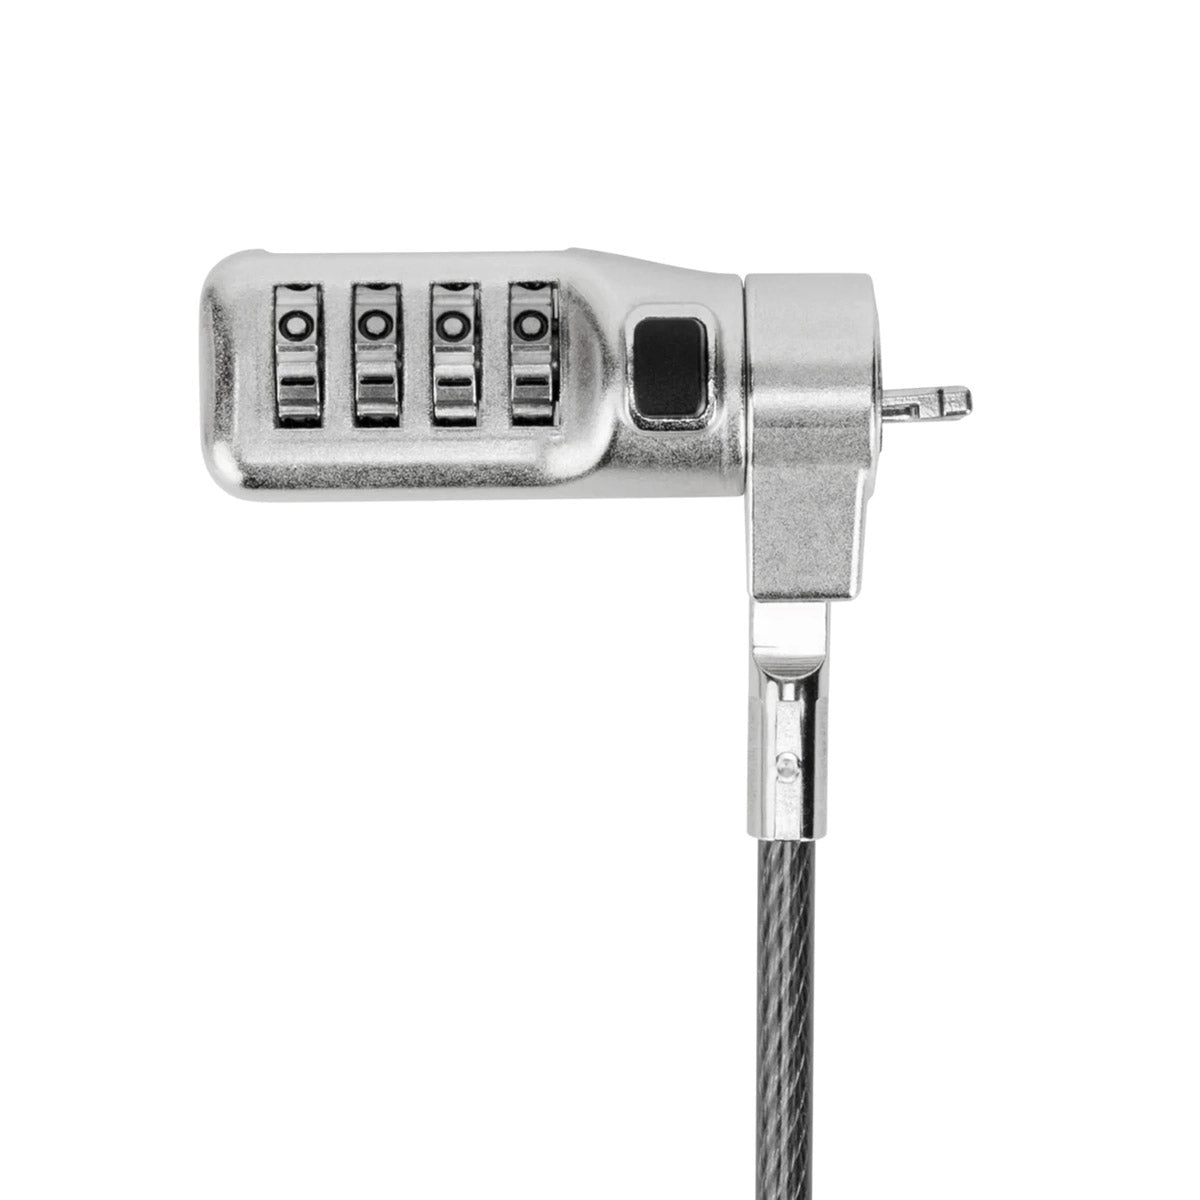 Targus ASP71GLX DEFCON® Compact Slot Resettable Combo Cable Lock  手提電腦防盜鎖